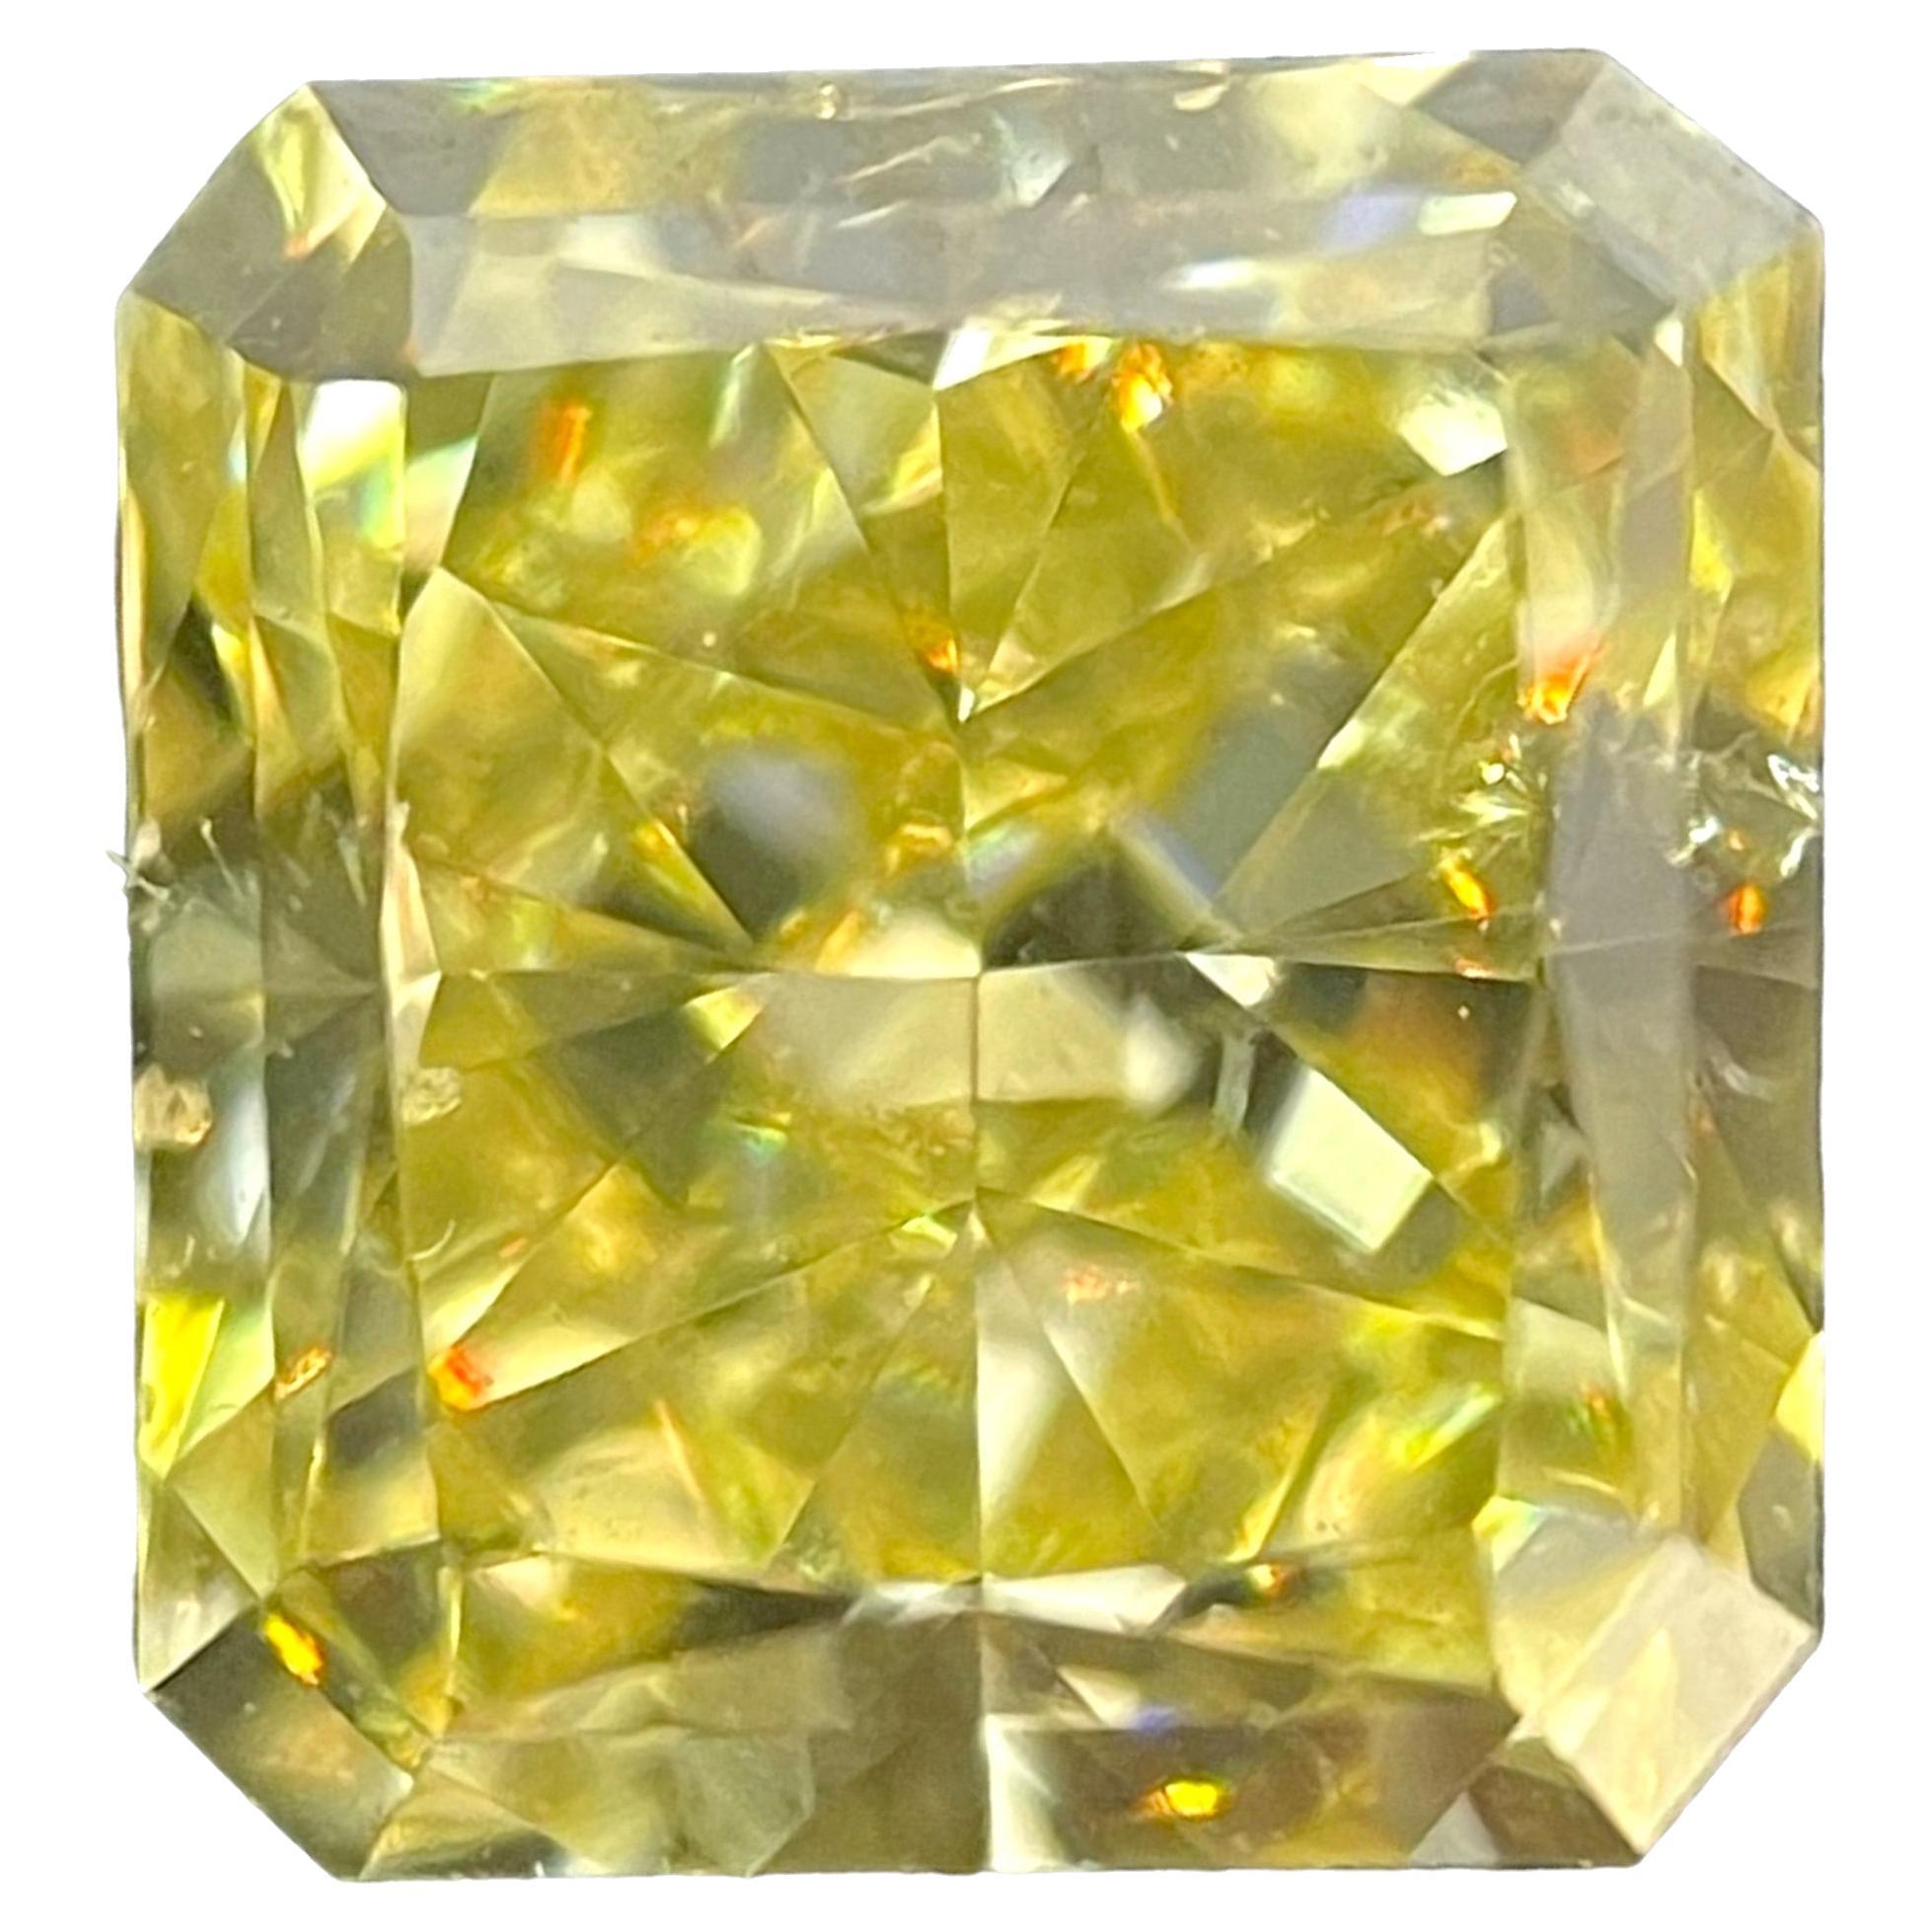 Diamant jaune fantaisie rectangulaire brillant I1 de 1,01 carat certifié par le GIA